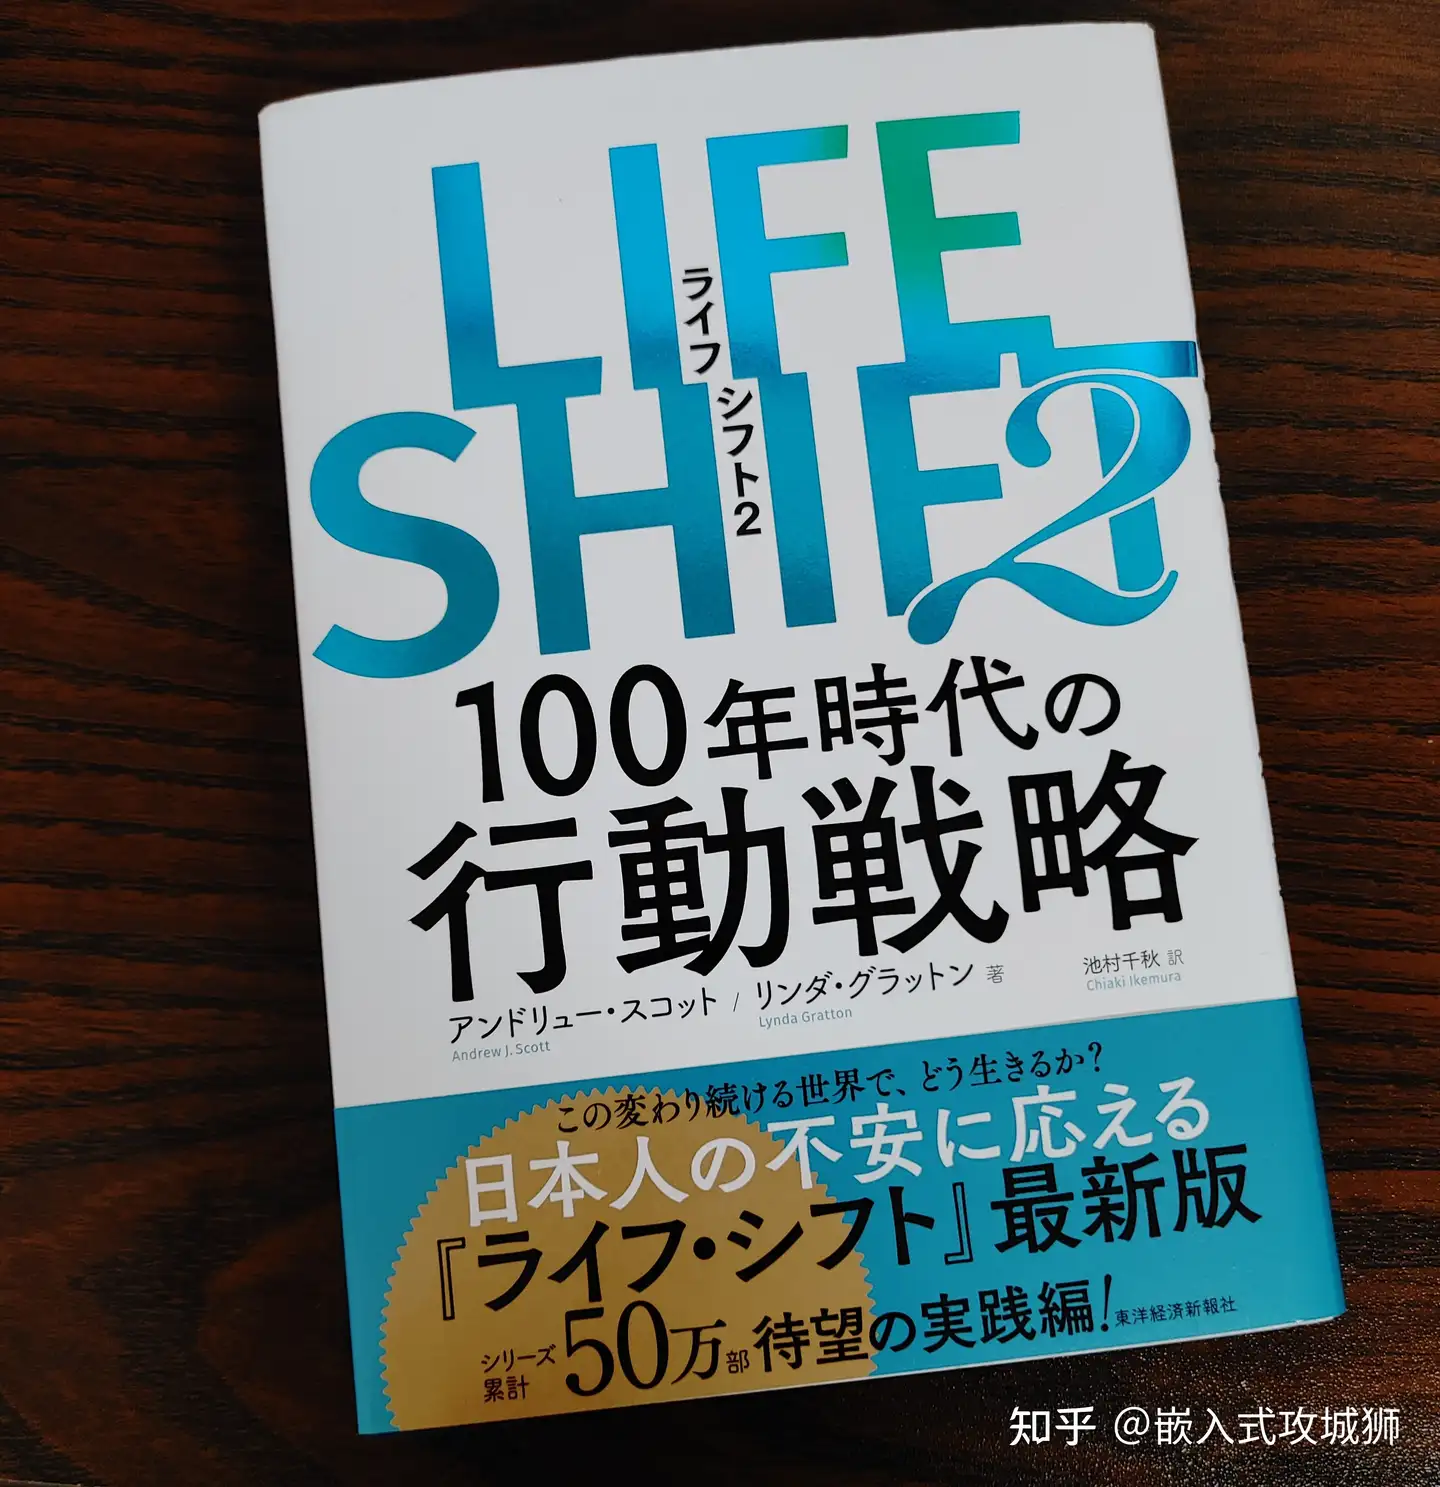 LIFE SHIFT 2 100 年行动策略- 知乎